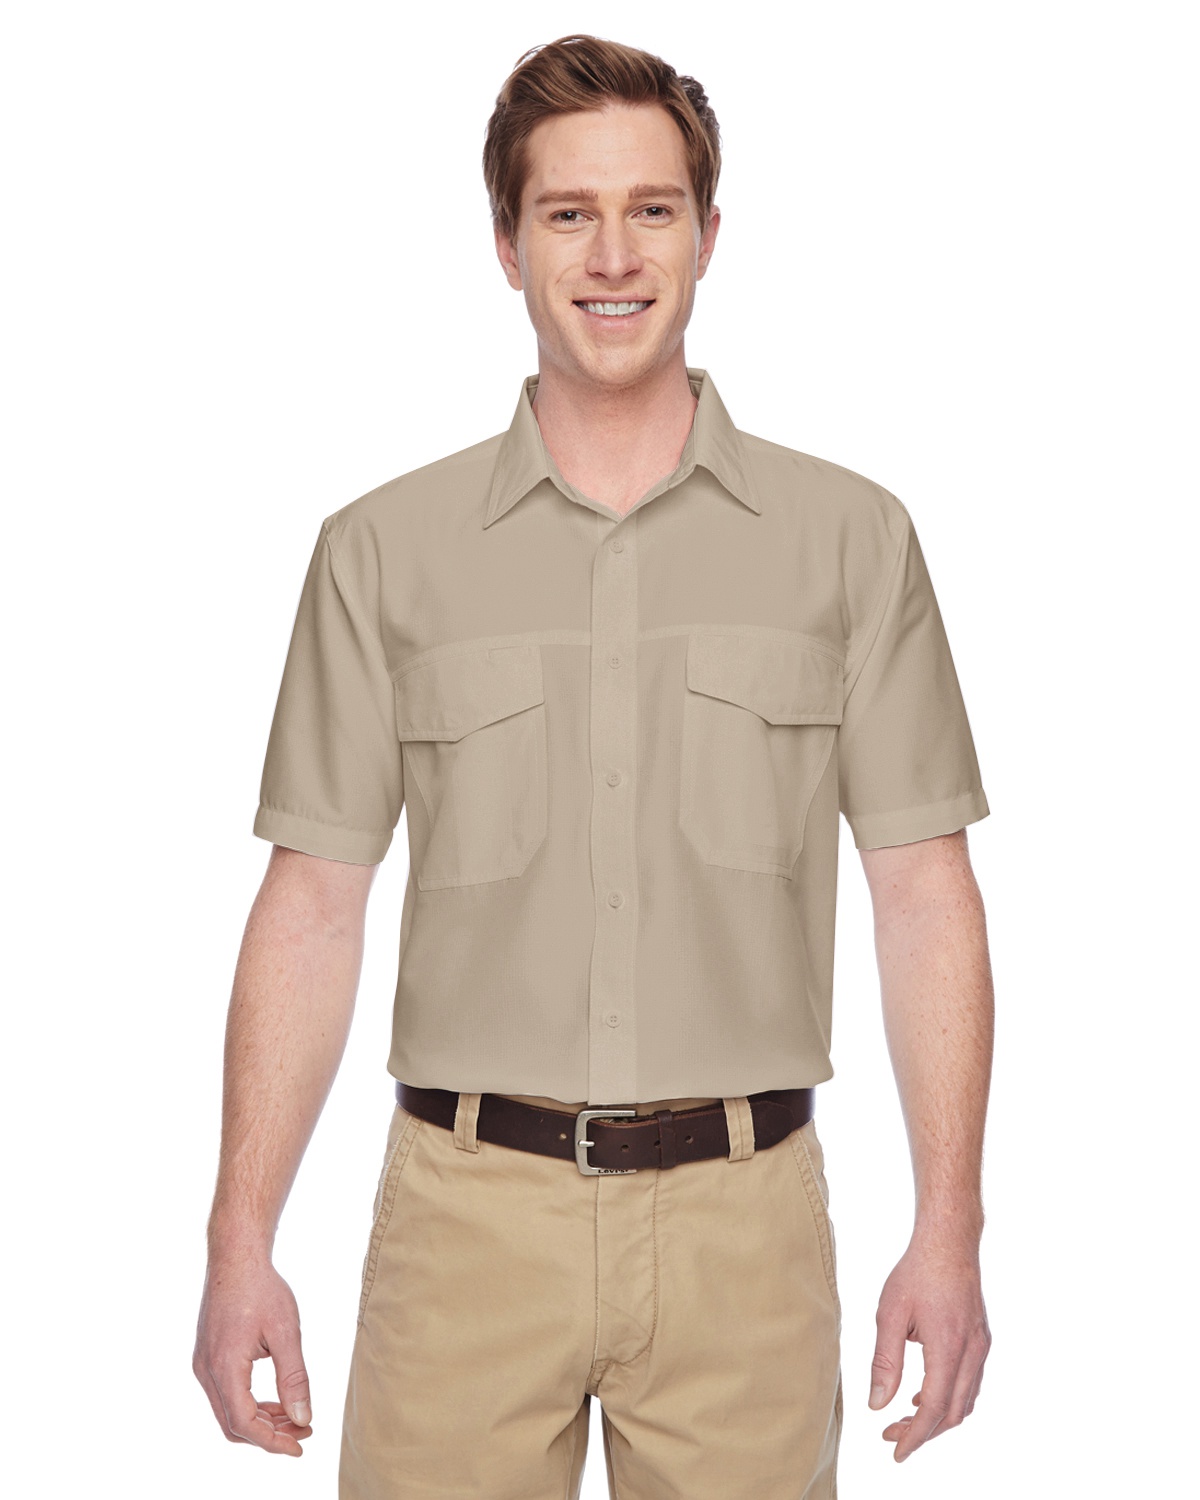 'Harriton M580 Men's Key West Short Sleeve Performance Staff Shirt'